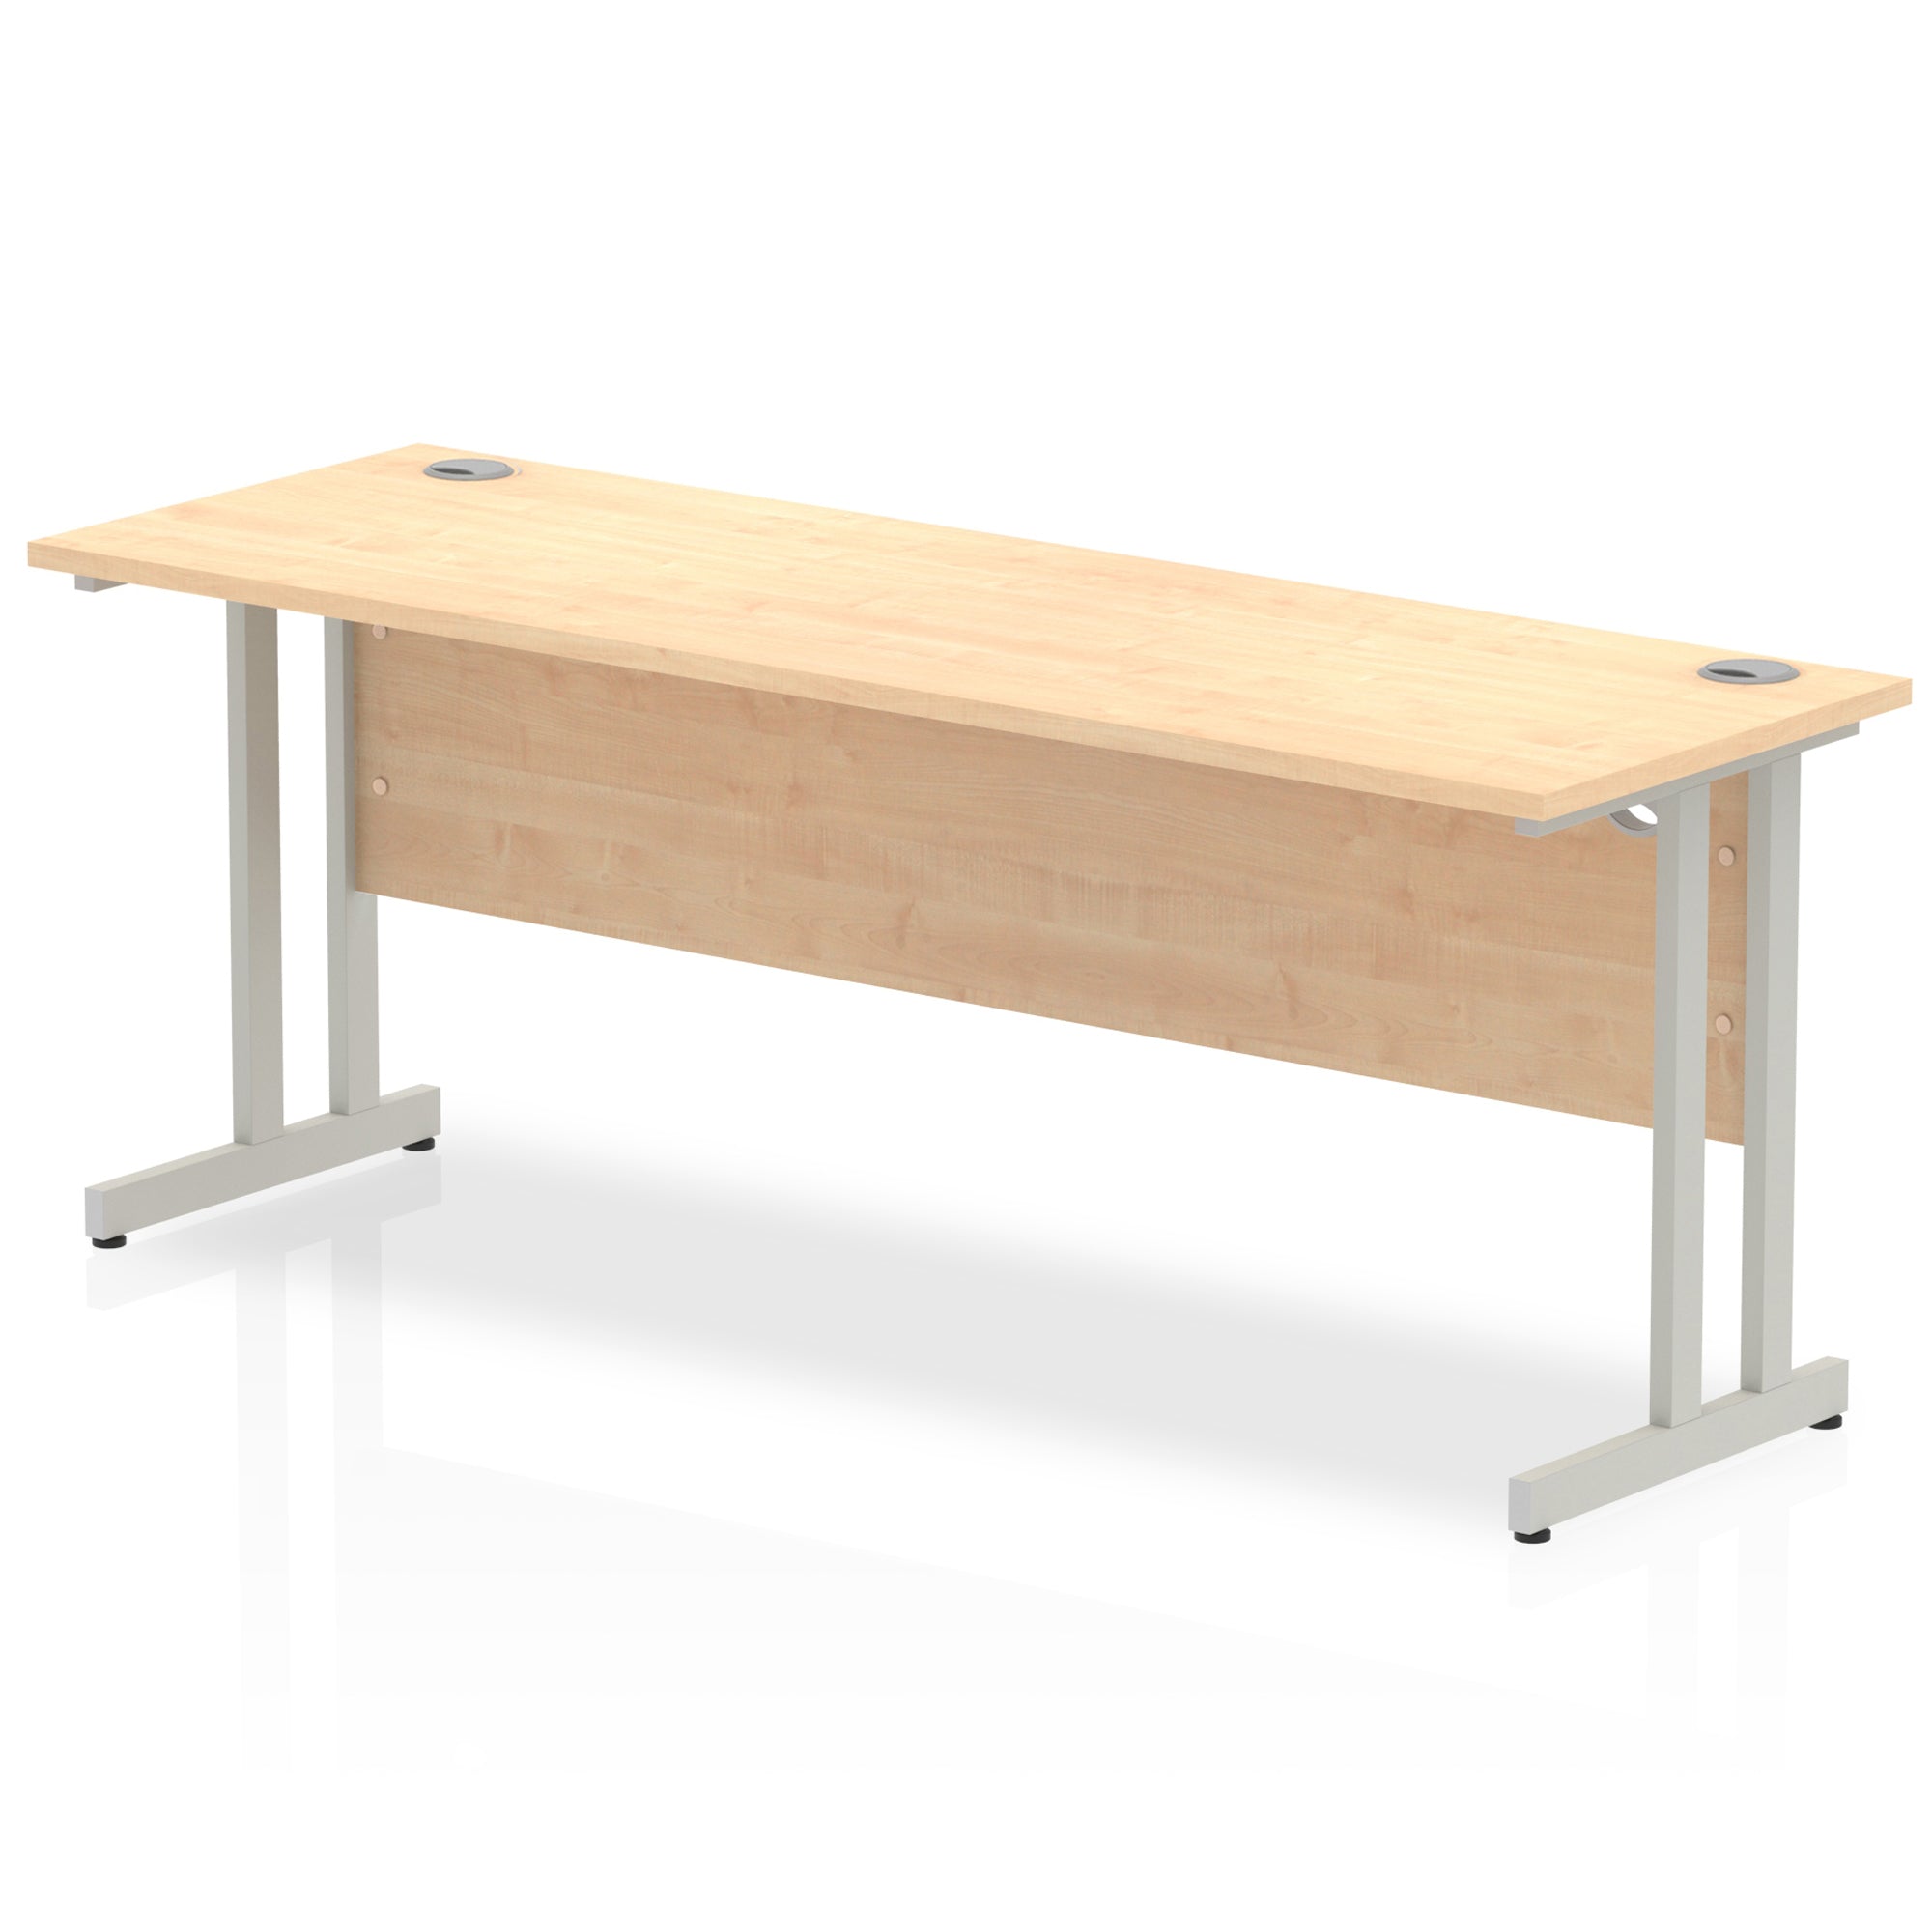 Impulse 1800mm Slimline Desk Cantilever Leg - MFC Rectangular, Self-Assembly, 5-Year Guarantee, Silver/White/Black Frame, 1800x600 Top